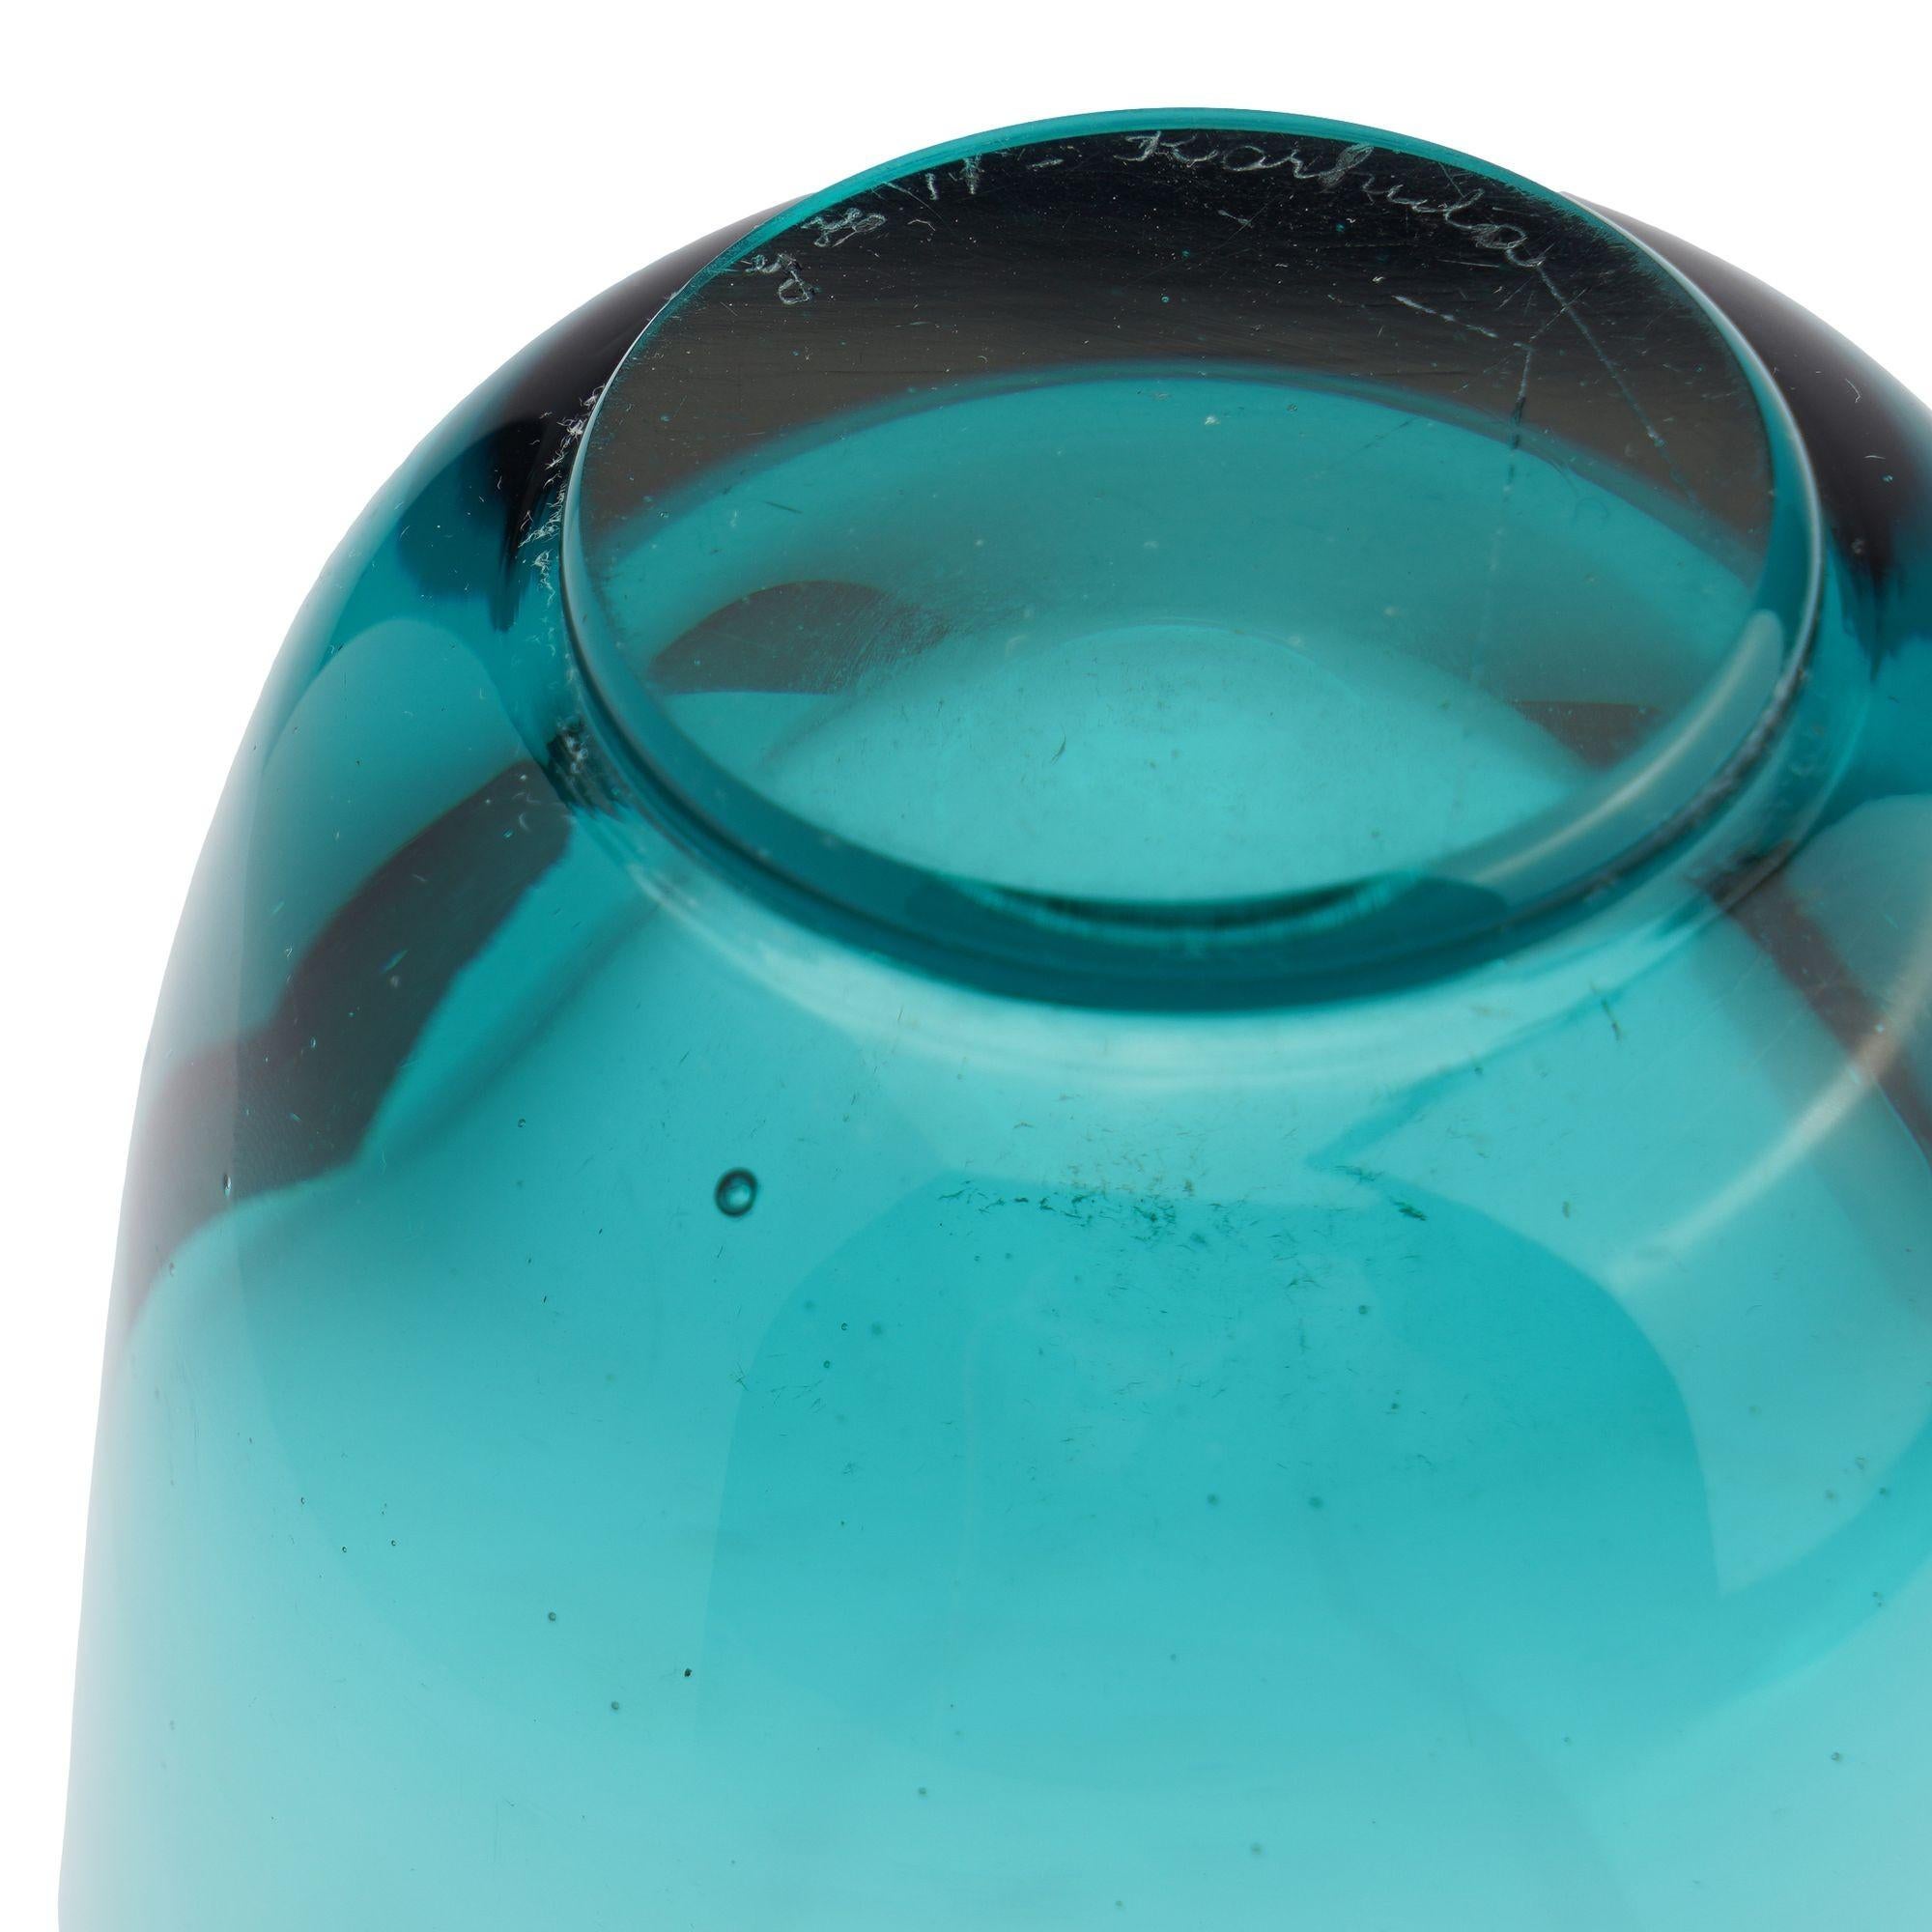 Blaugrüne Vase aus mundgeblasenem Karhula-Kunstglas, 1940er-Jahre (Mitte des 20. Jahrhunderts) im Angebot